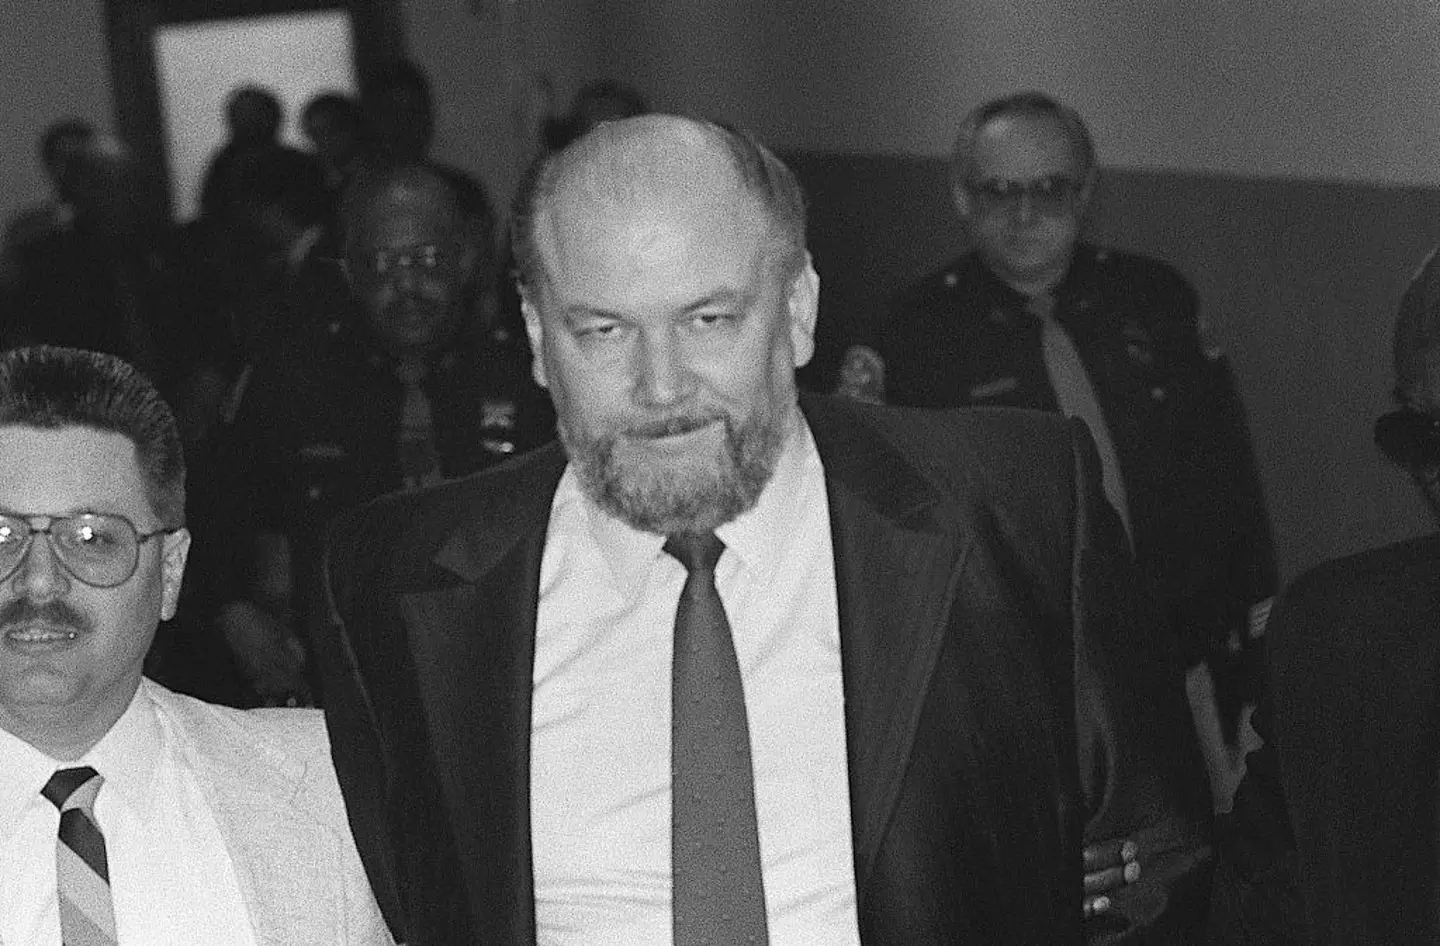 Kuklinski received two life sentences.